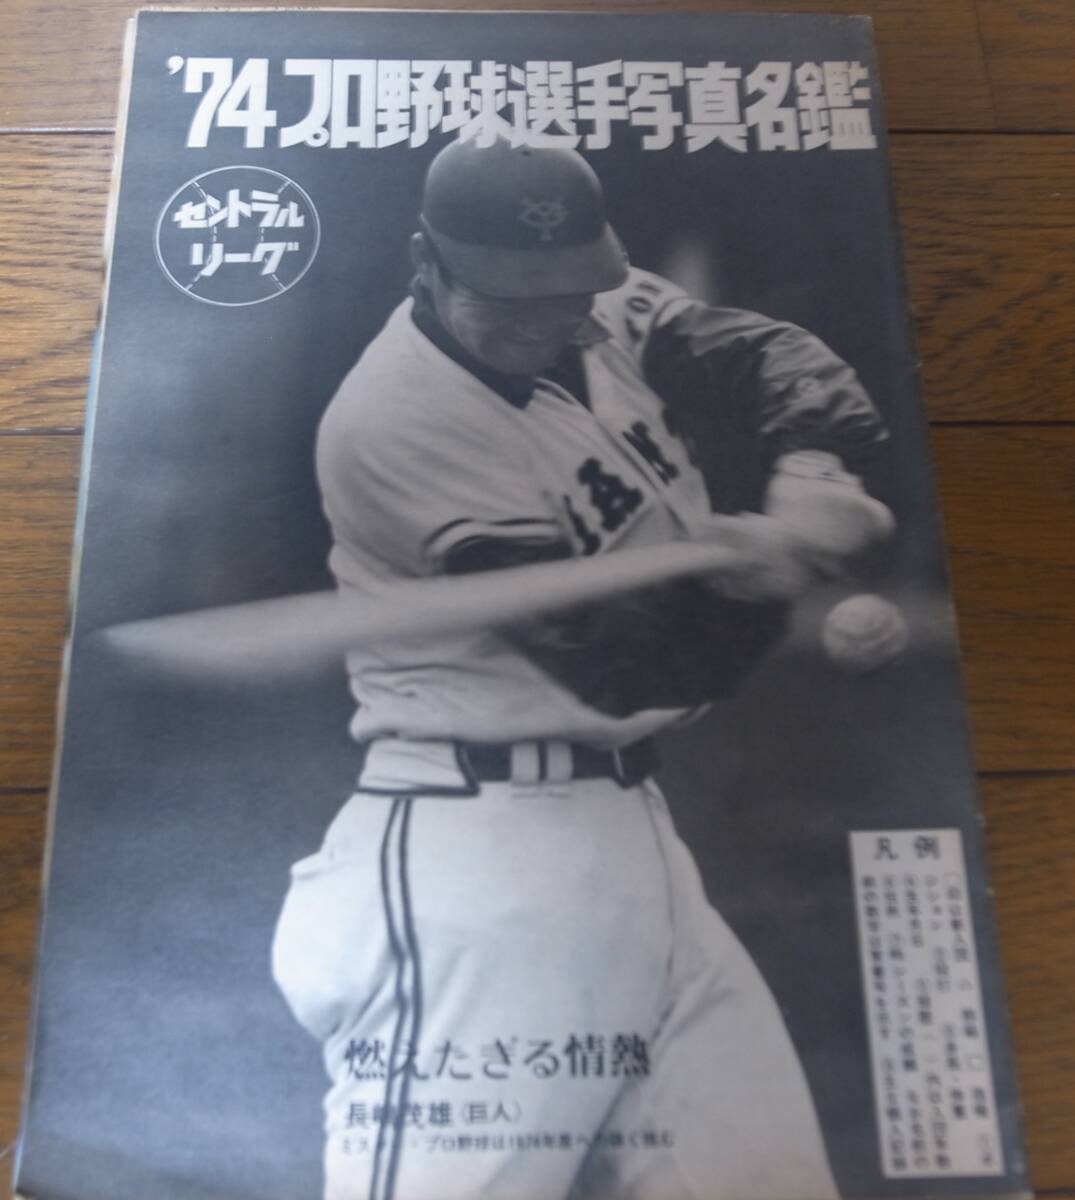  Showa 49 год еженедельный Baseball / Professional Baseball игрок фотография название ./ Yomiuri Giants / Lotte Orion z/ Chunichi Dragons / южные моря Hawk s/ futoshi flat . Club 